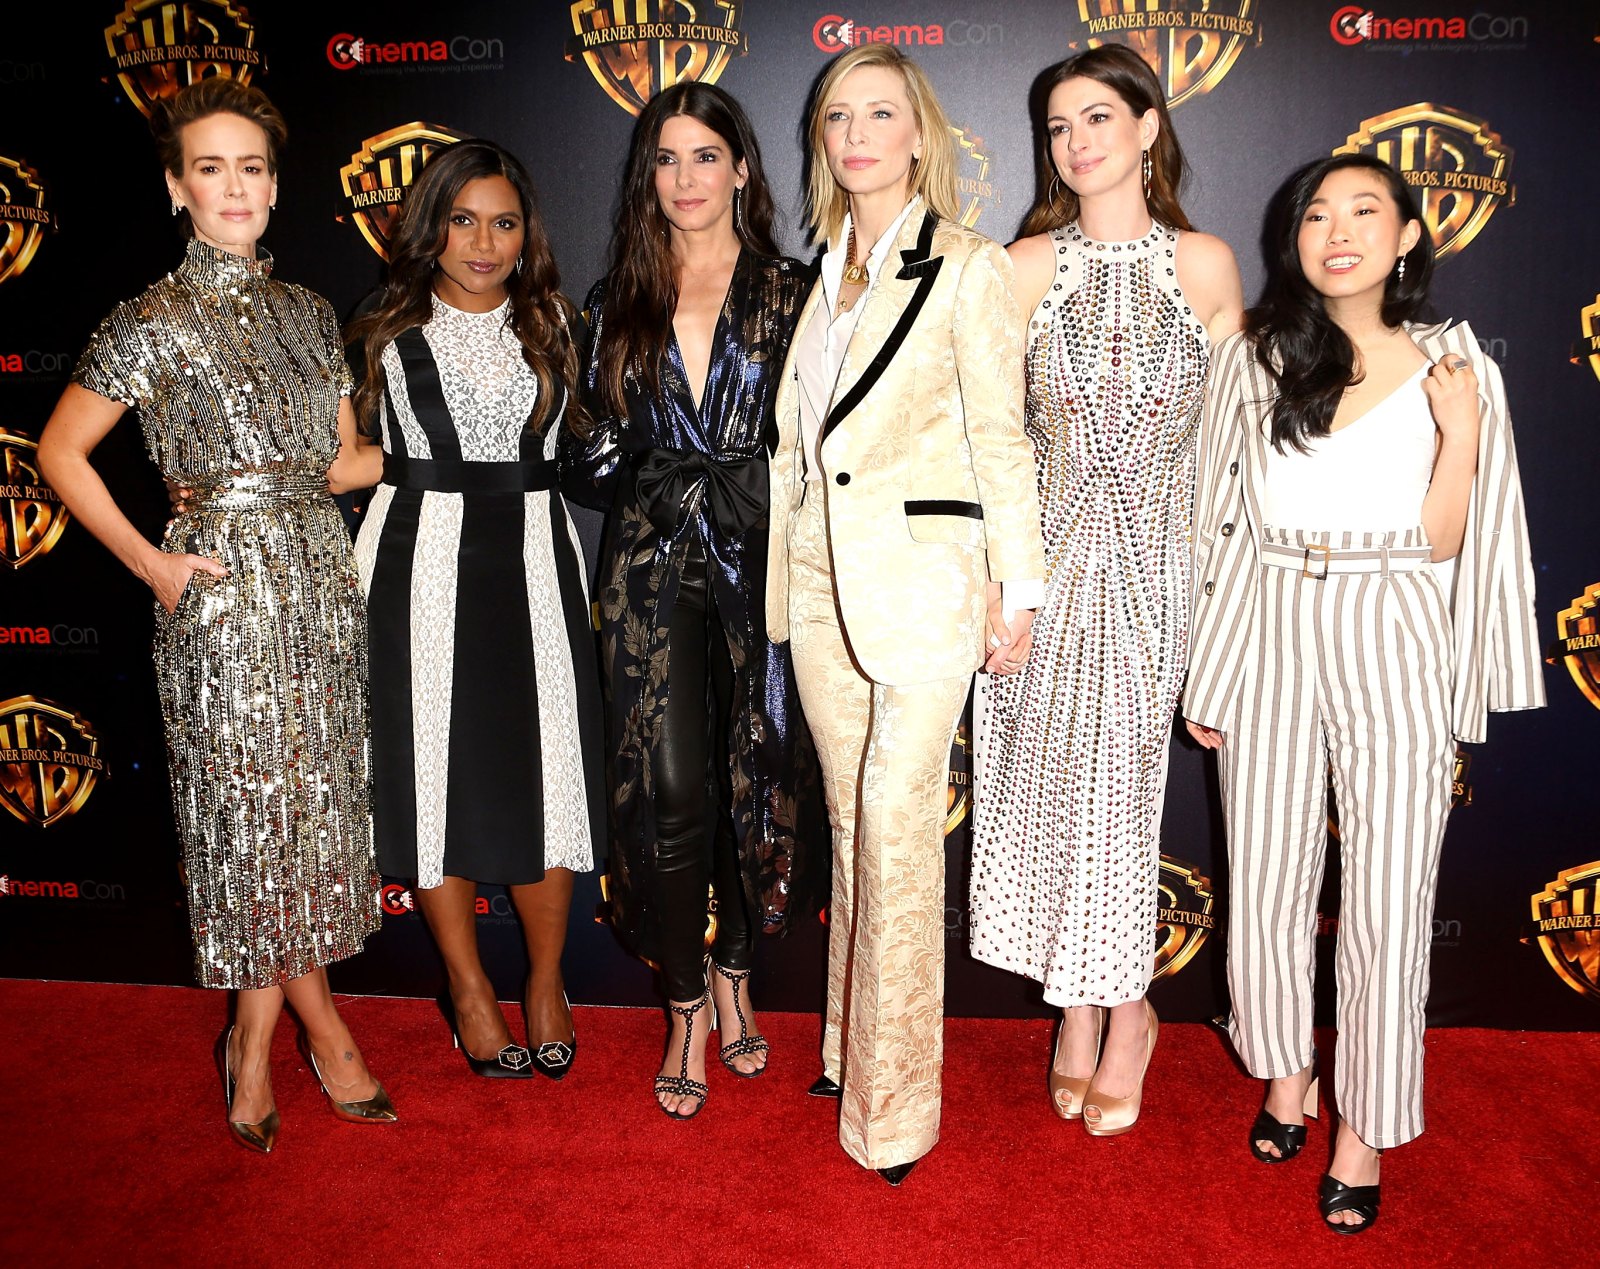 Sarah Paulson, Mindy Kaling, Sandra Bullock, Cate Blanchett, Anne Hathaway